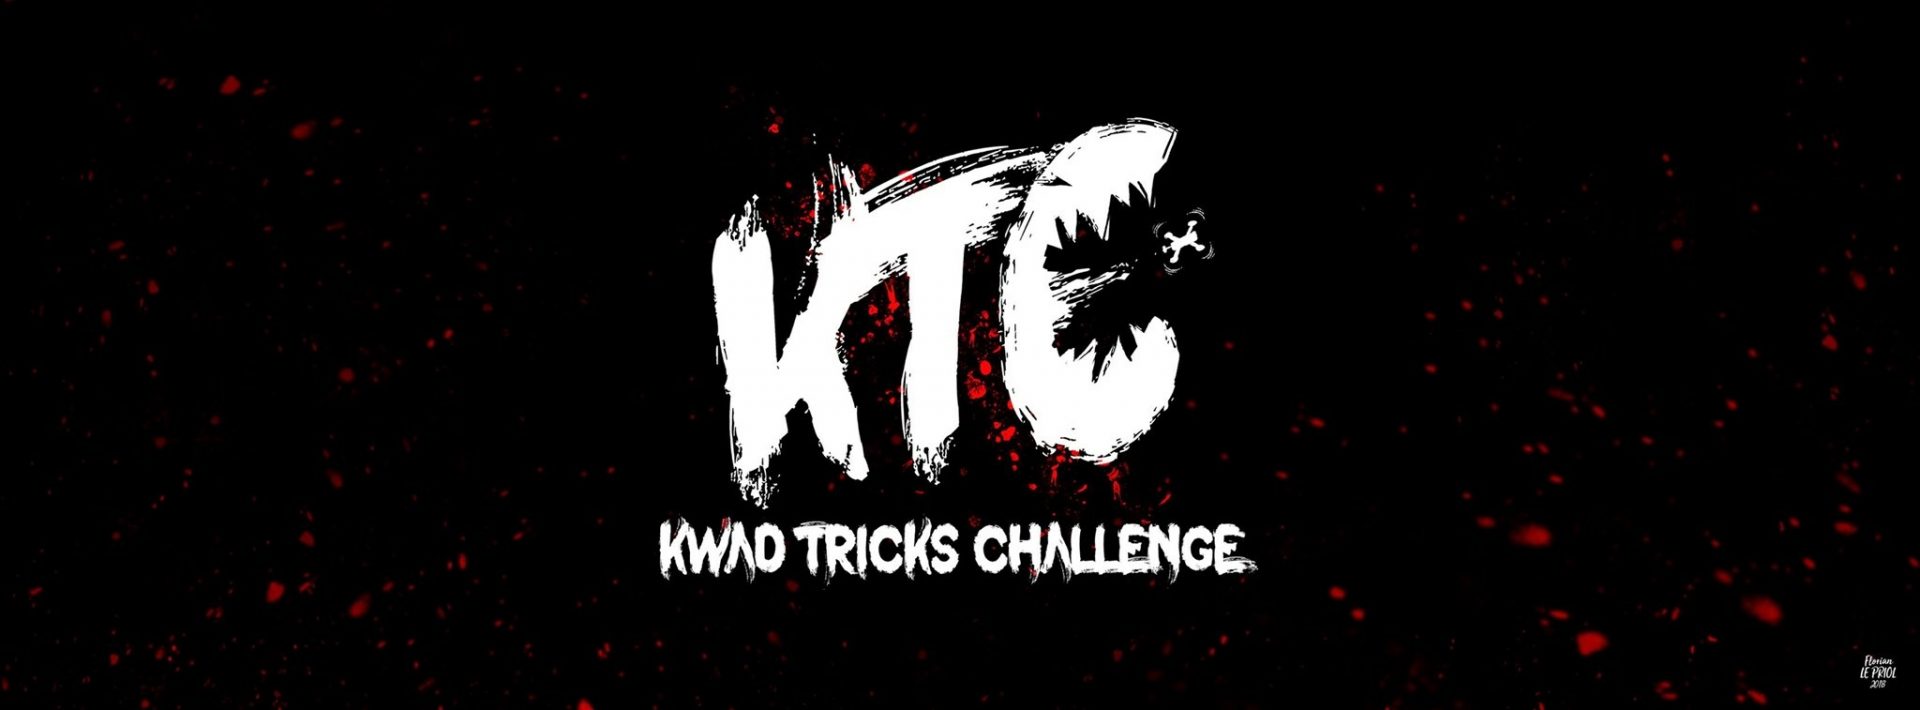 kwad tricks challenge KTC